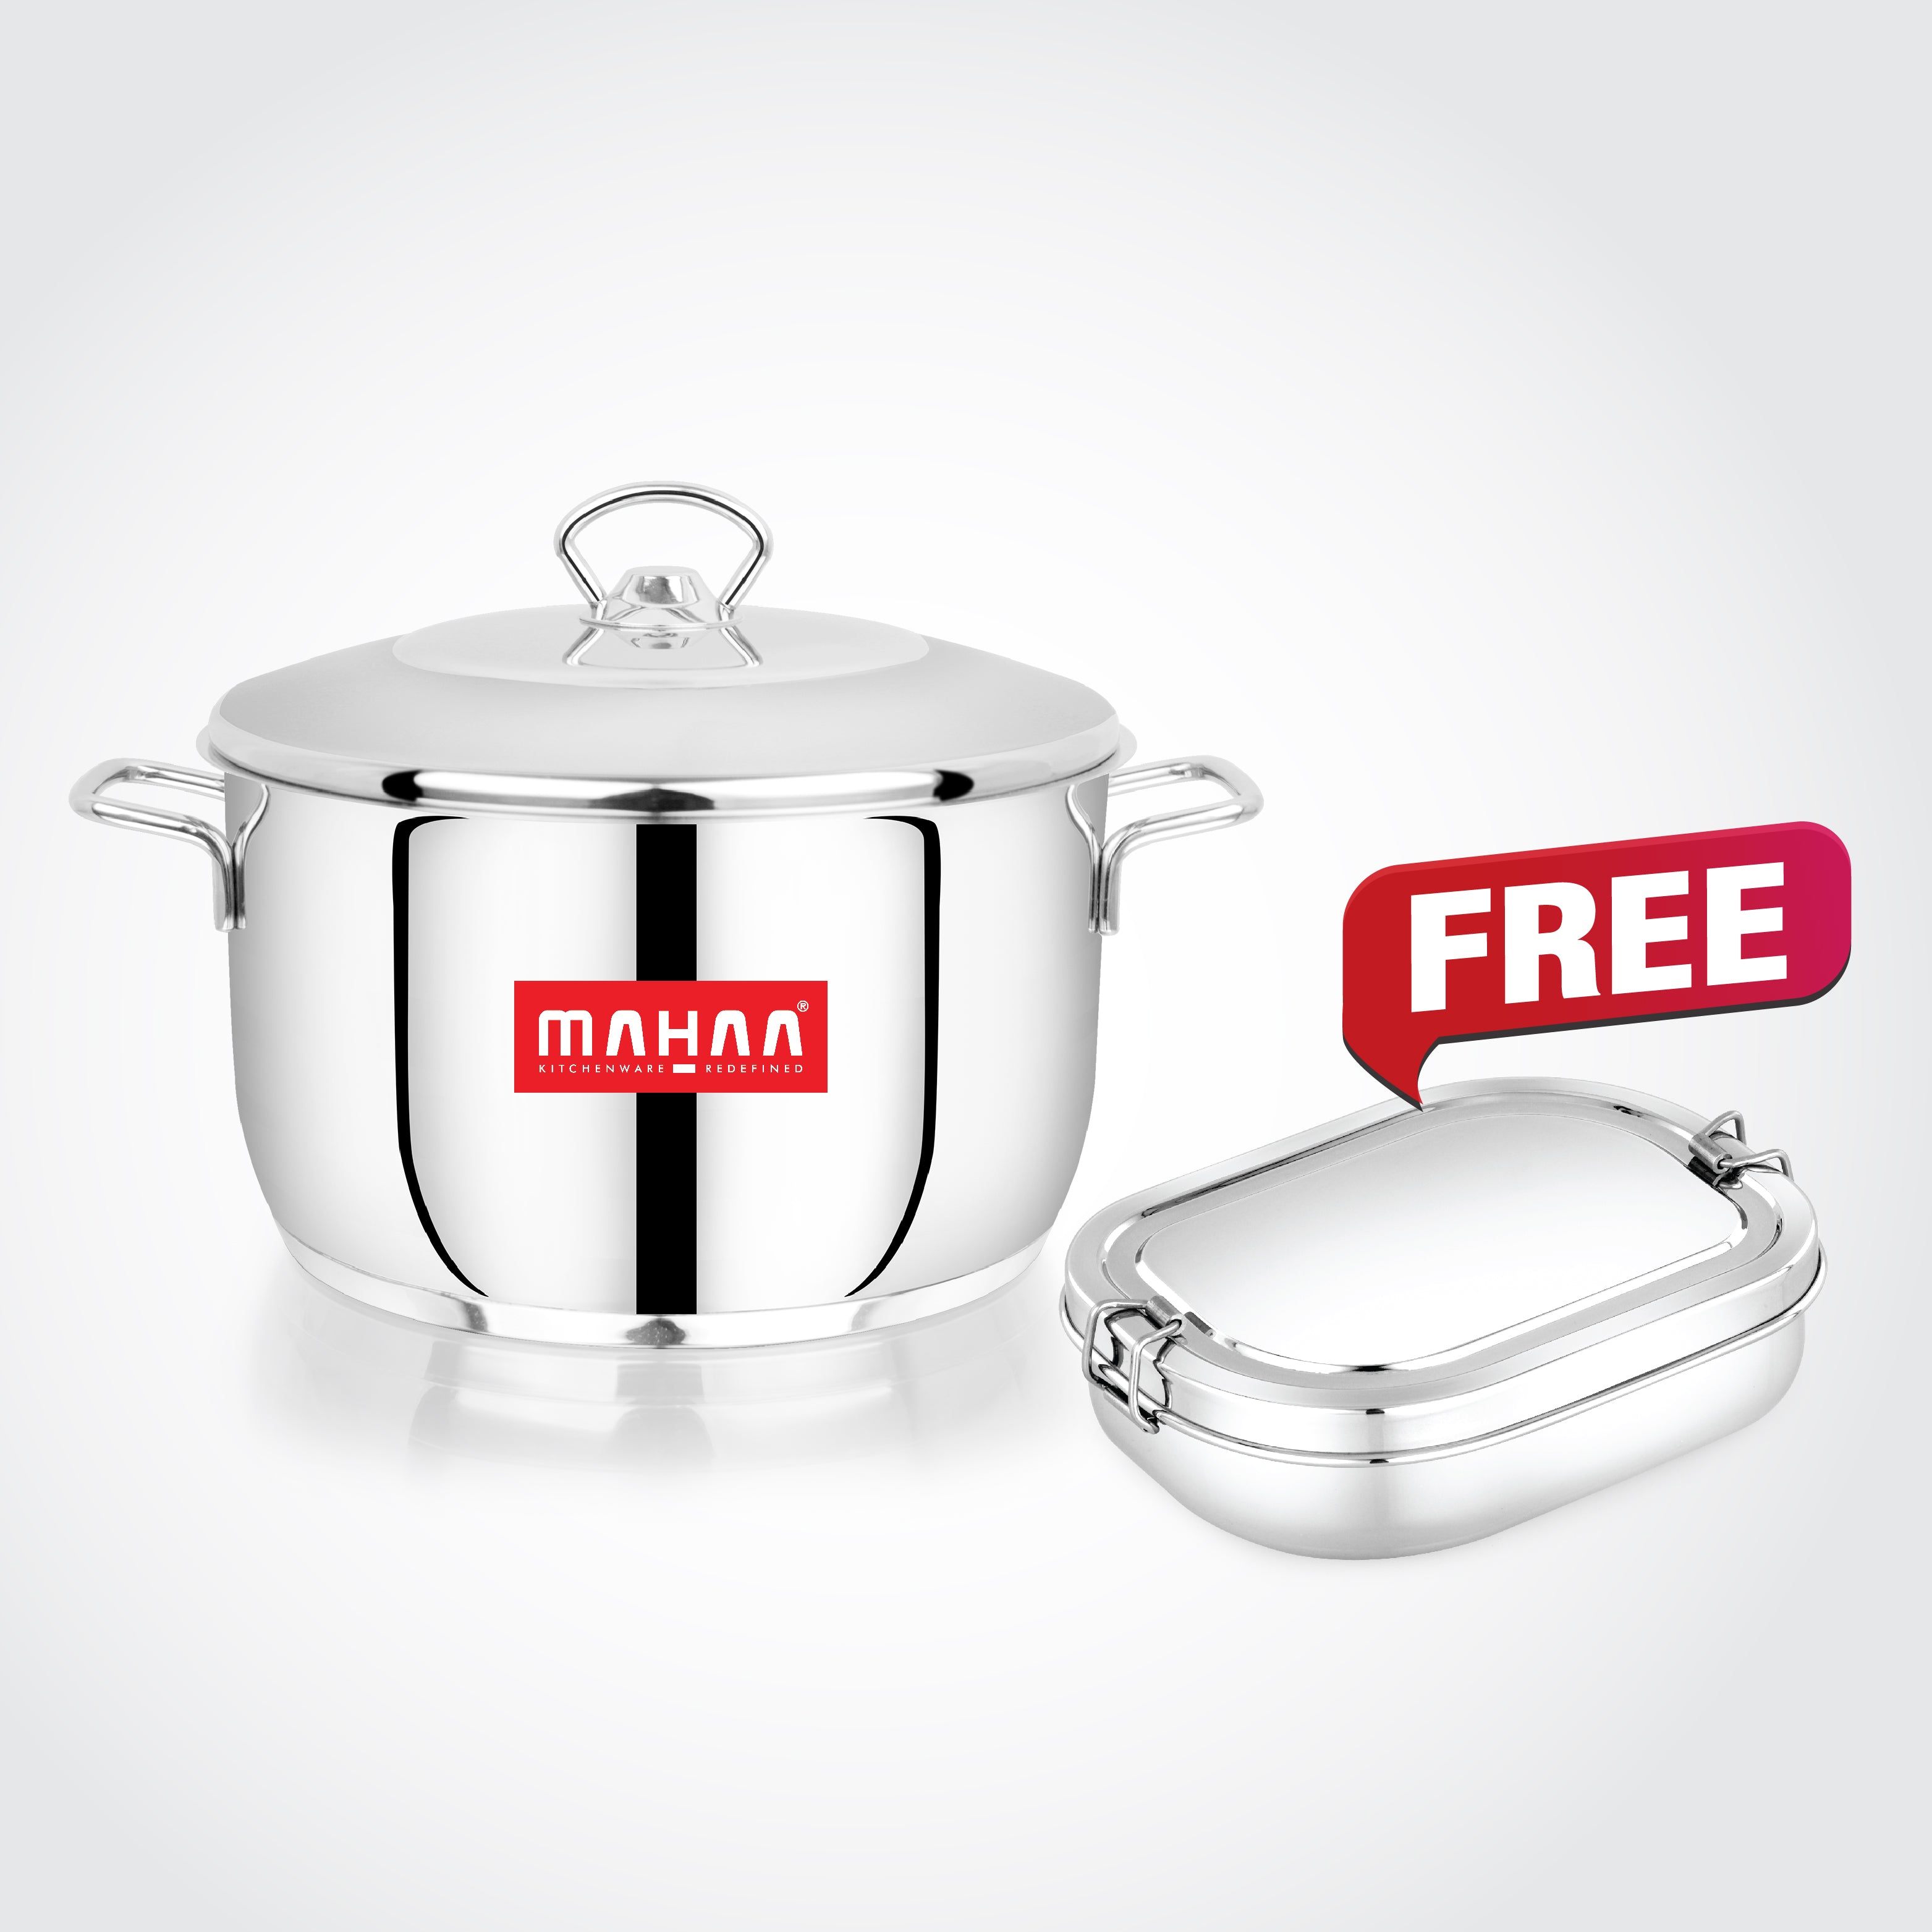 Mahaa offers #8: Avanti cooking Pot 24cm & Get Tango Lunch box FREE